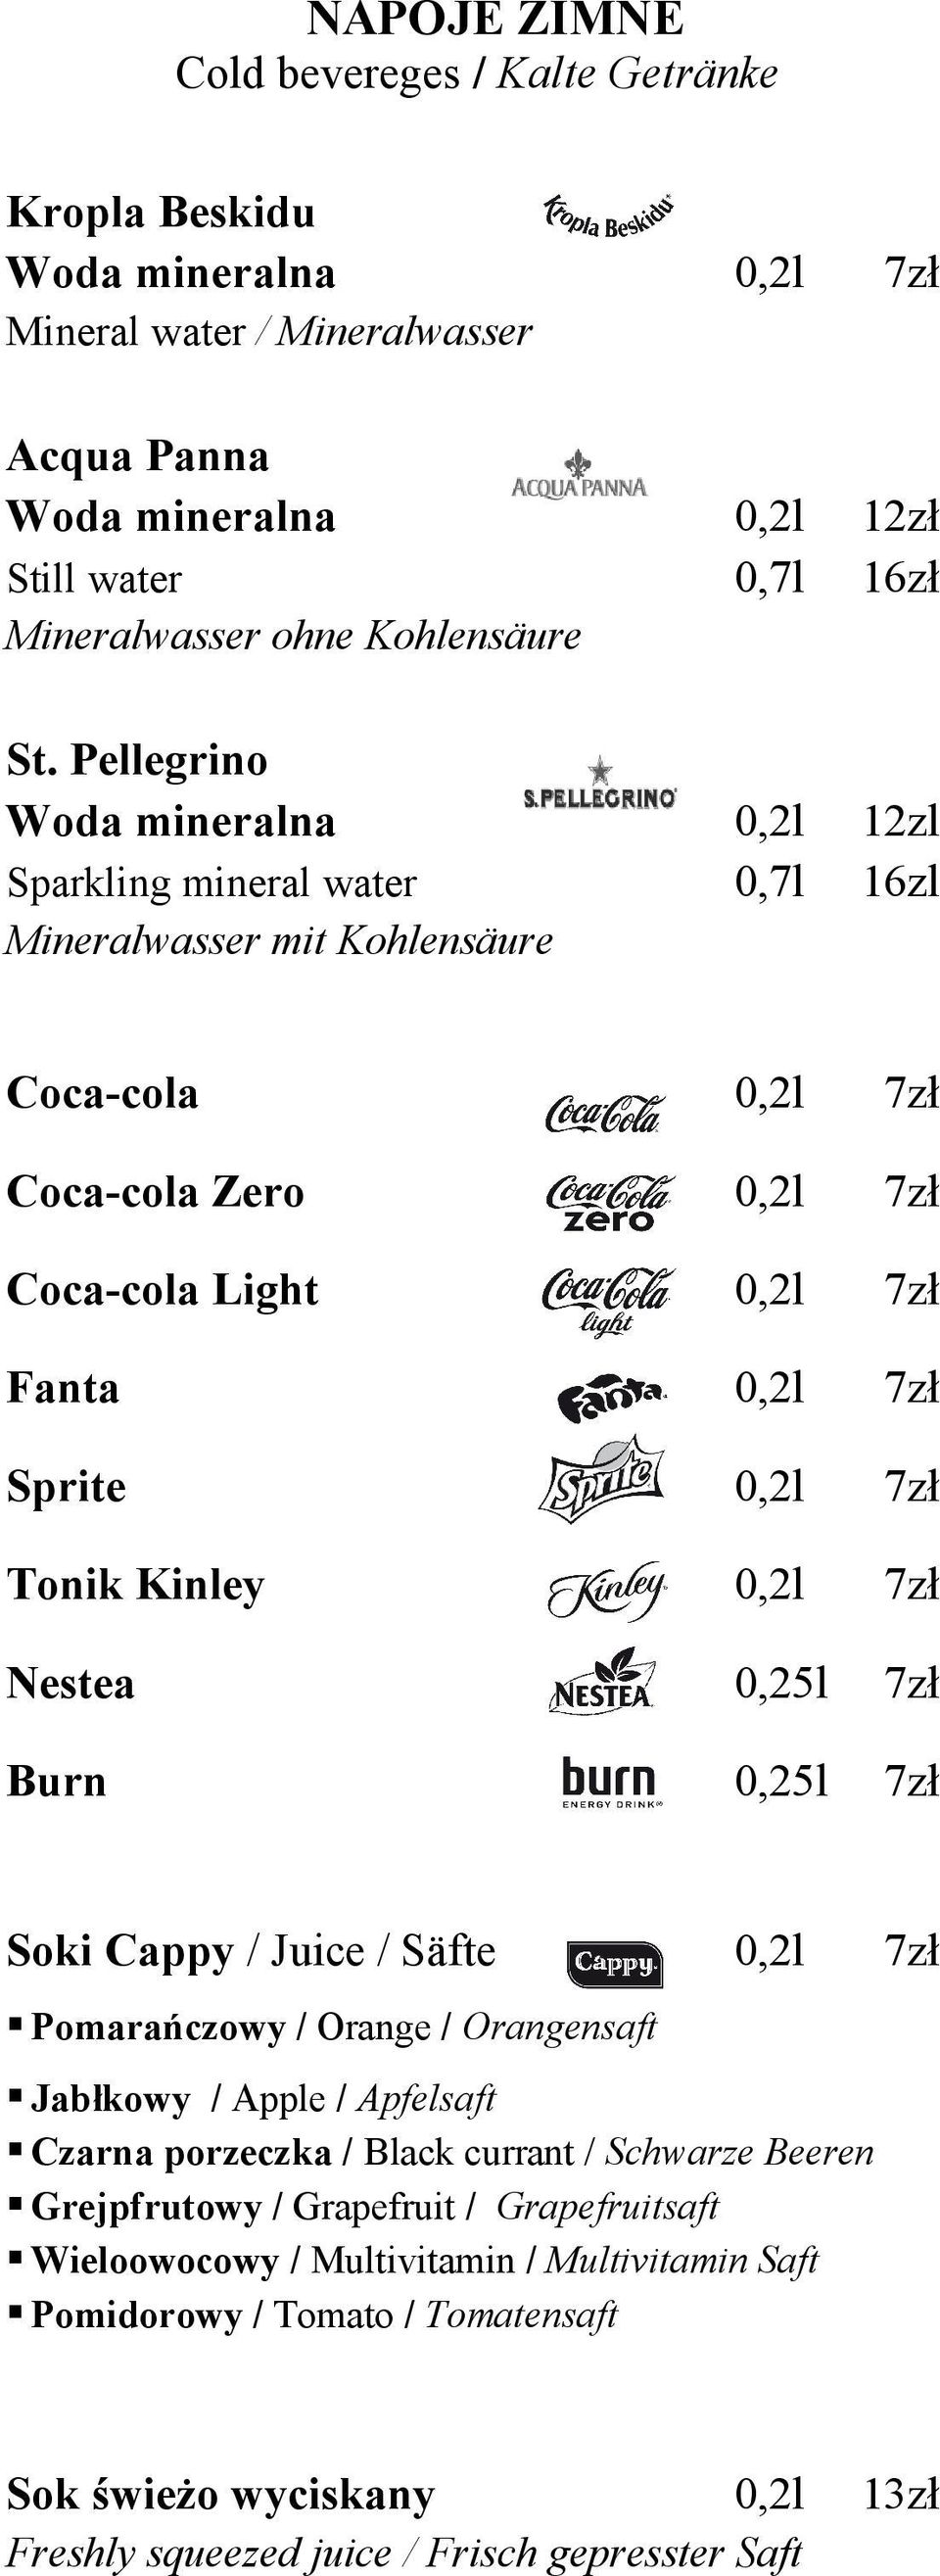 Pellegrino Woda mineralna 0,2l 12zl Sparkling mineral water 0,7l 16zl Mineralwasser mit Kohlensäure Coca-cola 0,2l 7zł Coca-cola Zero 0,2l 7zł Coca-cola Light 0,2l 7zł Fanta 0,2l 7zł Sprite 0,2l 7zł